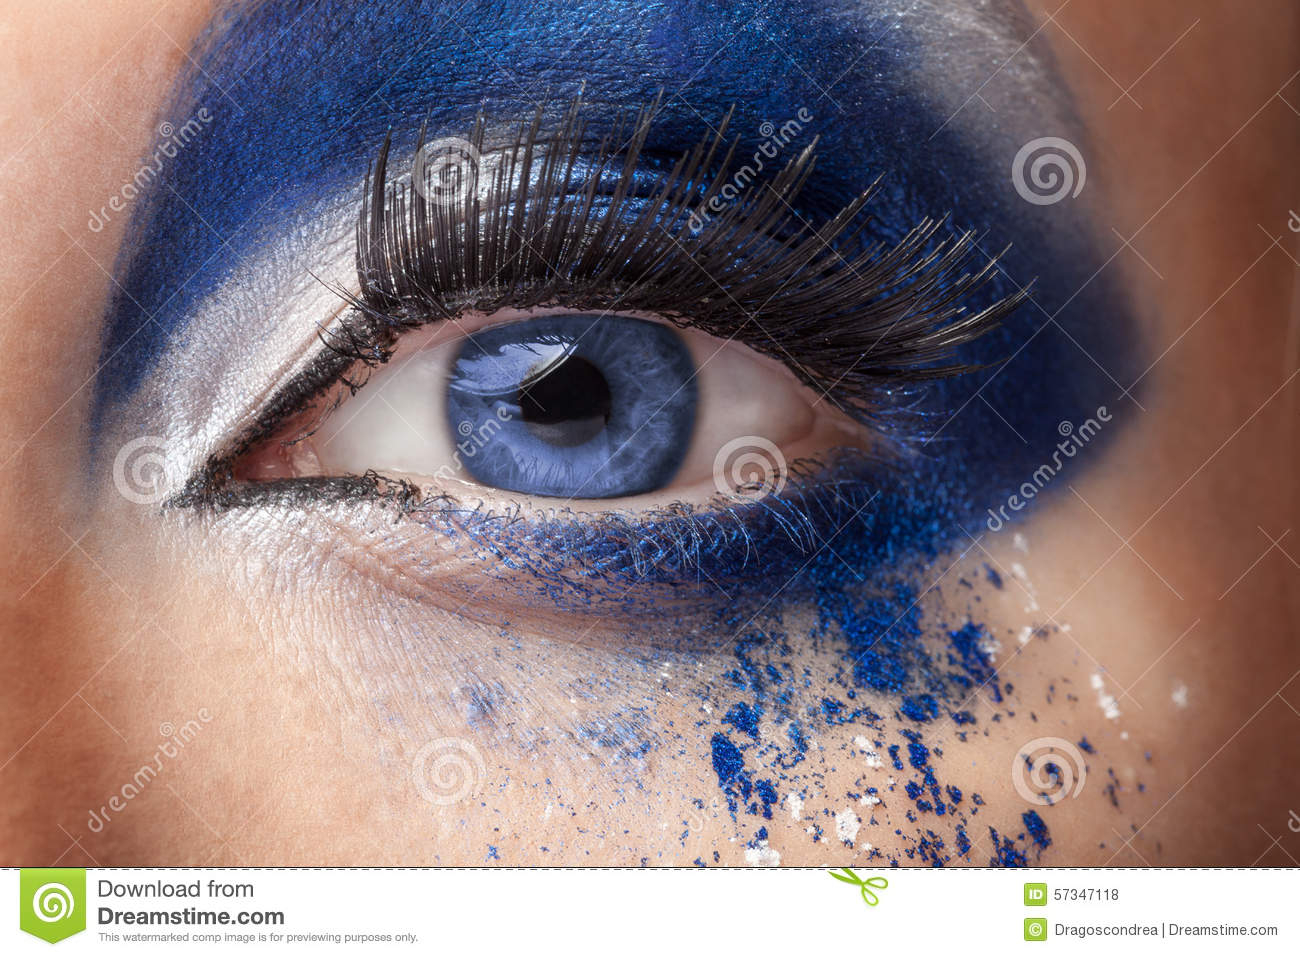 Fantasy Eye Makeup Blue Eye With Fantasy Fashion Make Up Stock Photo Image Of Eyebrow